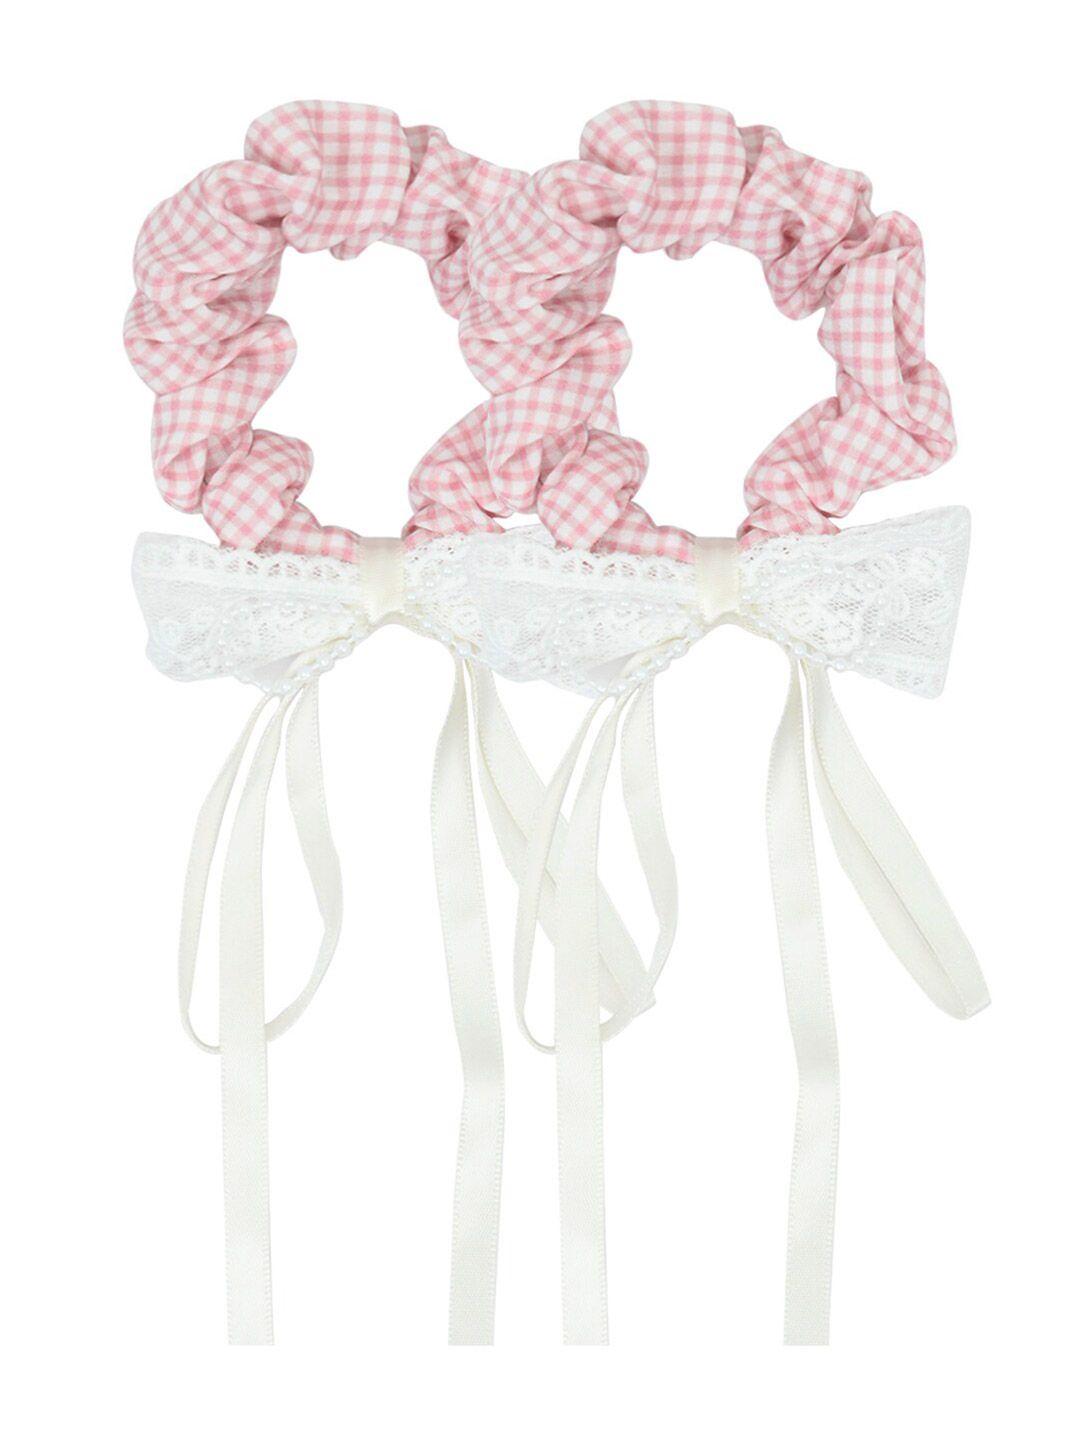 funkrafts girls pink & white set of 2 lace hair accessory set